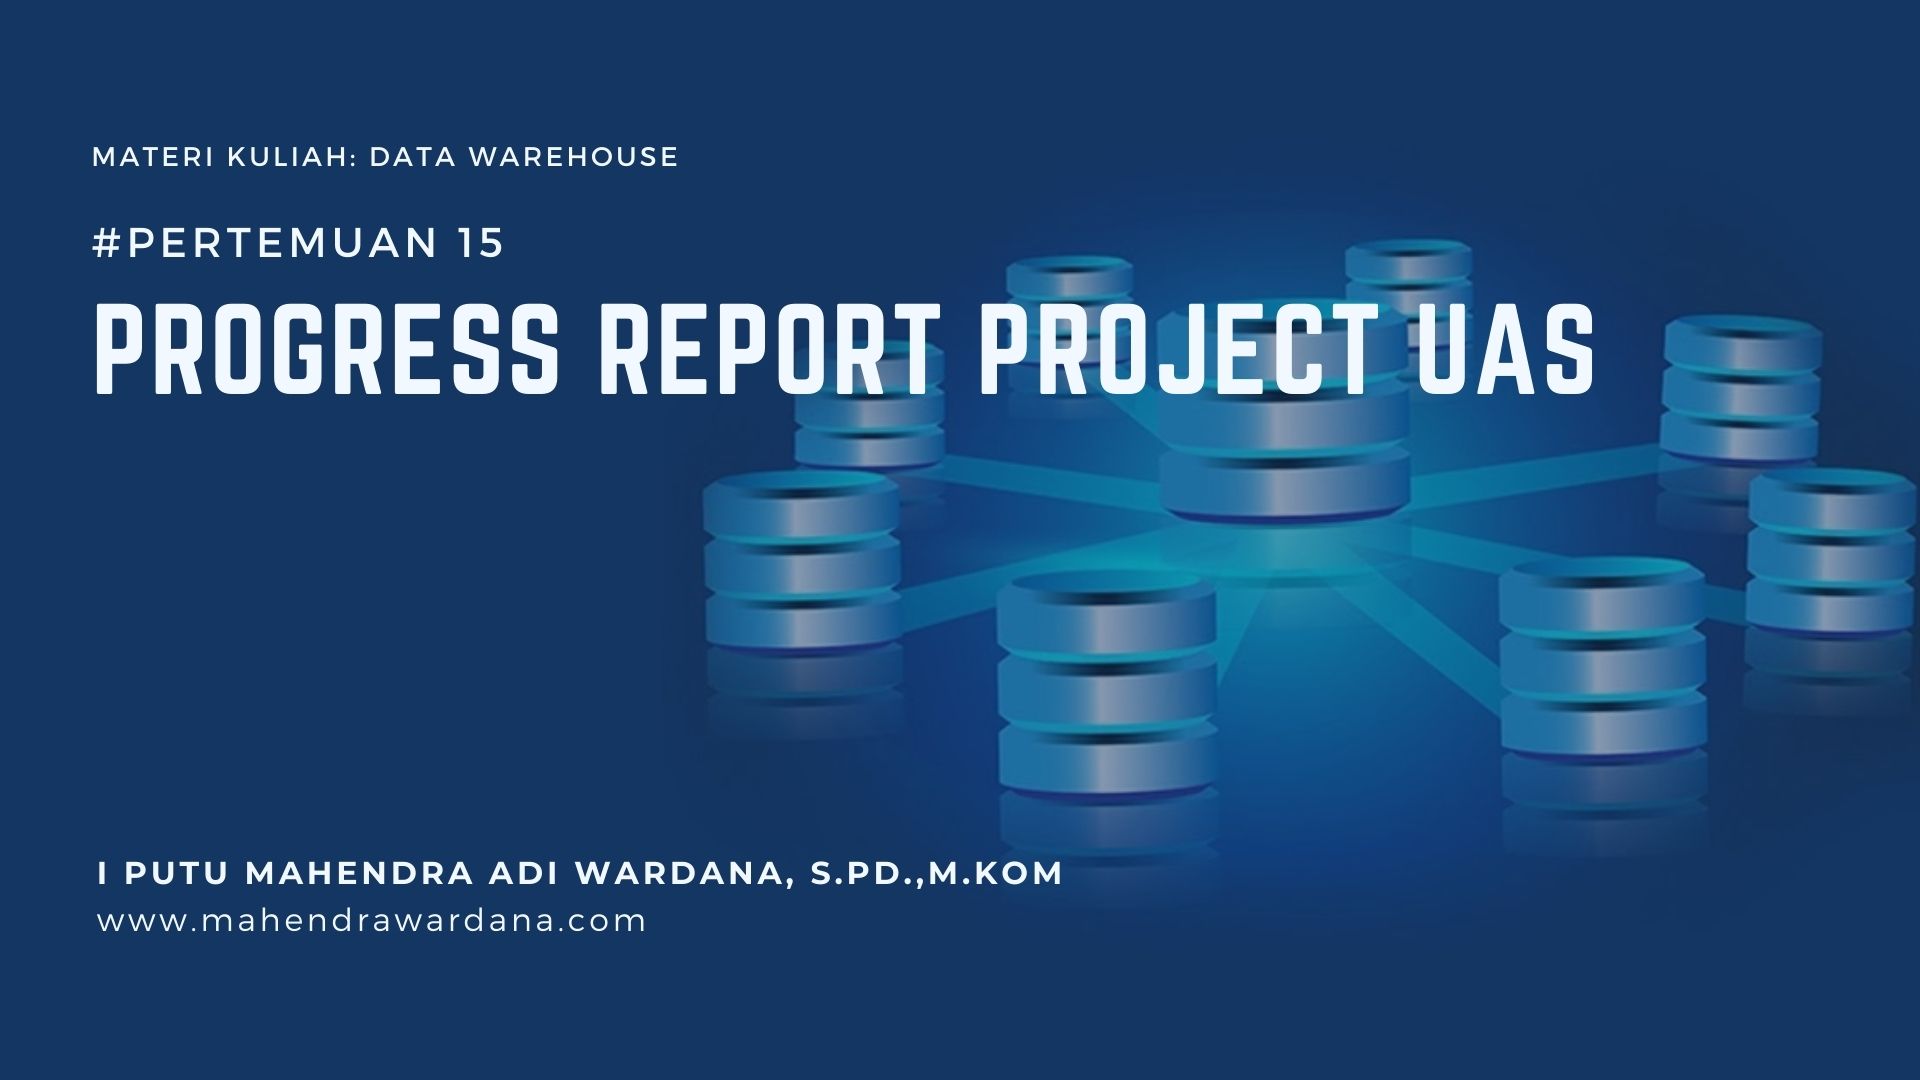 Pertemuan 15 - Progress Report Project UAS